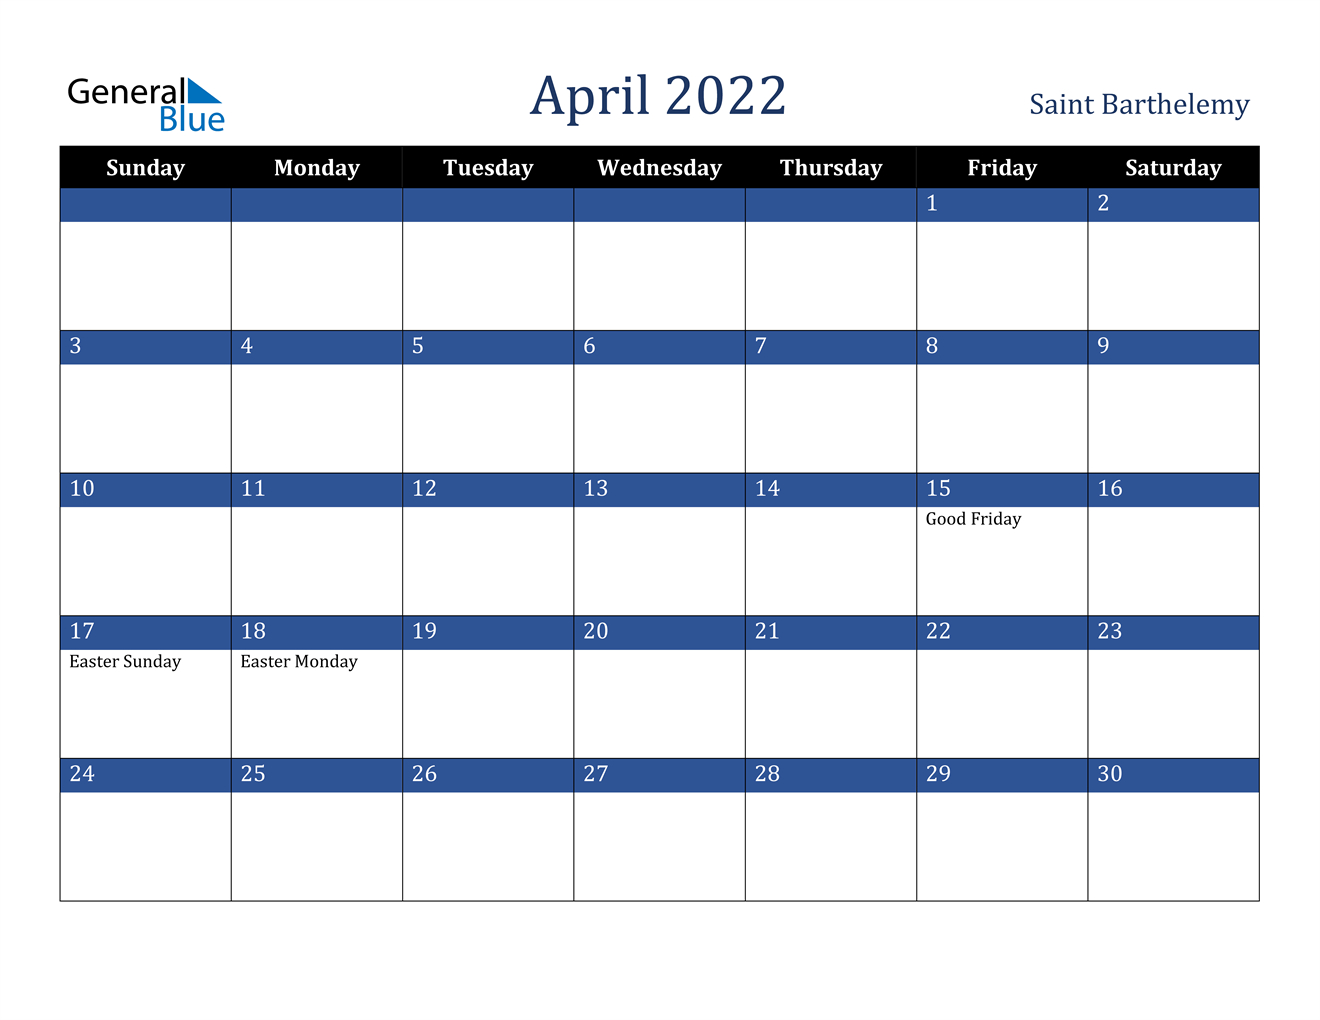 April 2022 Calendar - Saint Barthelemy